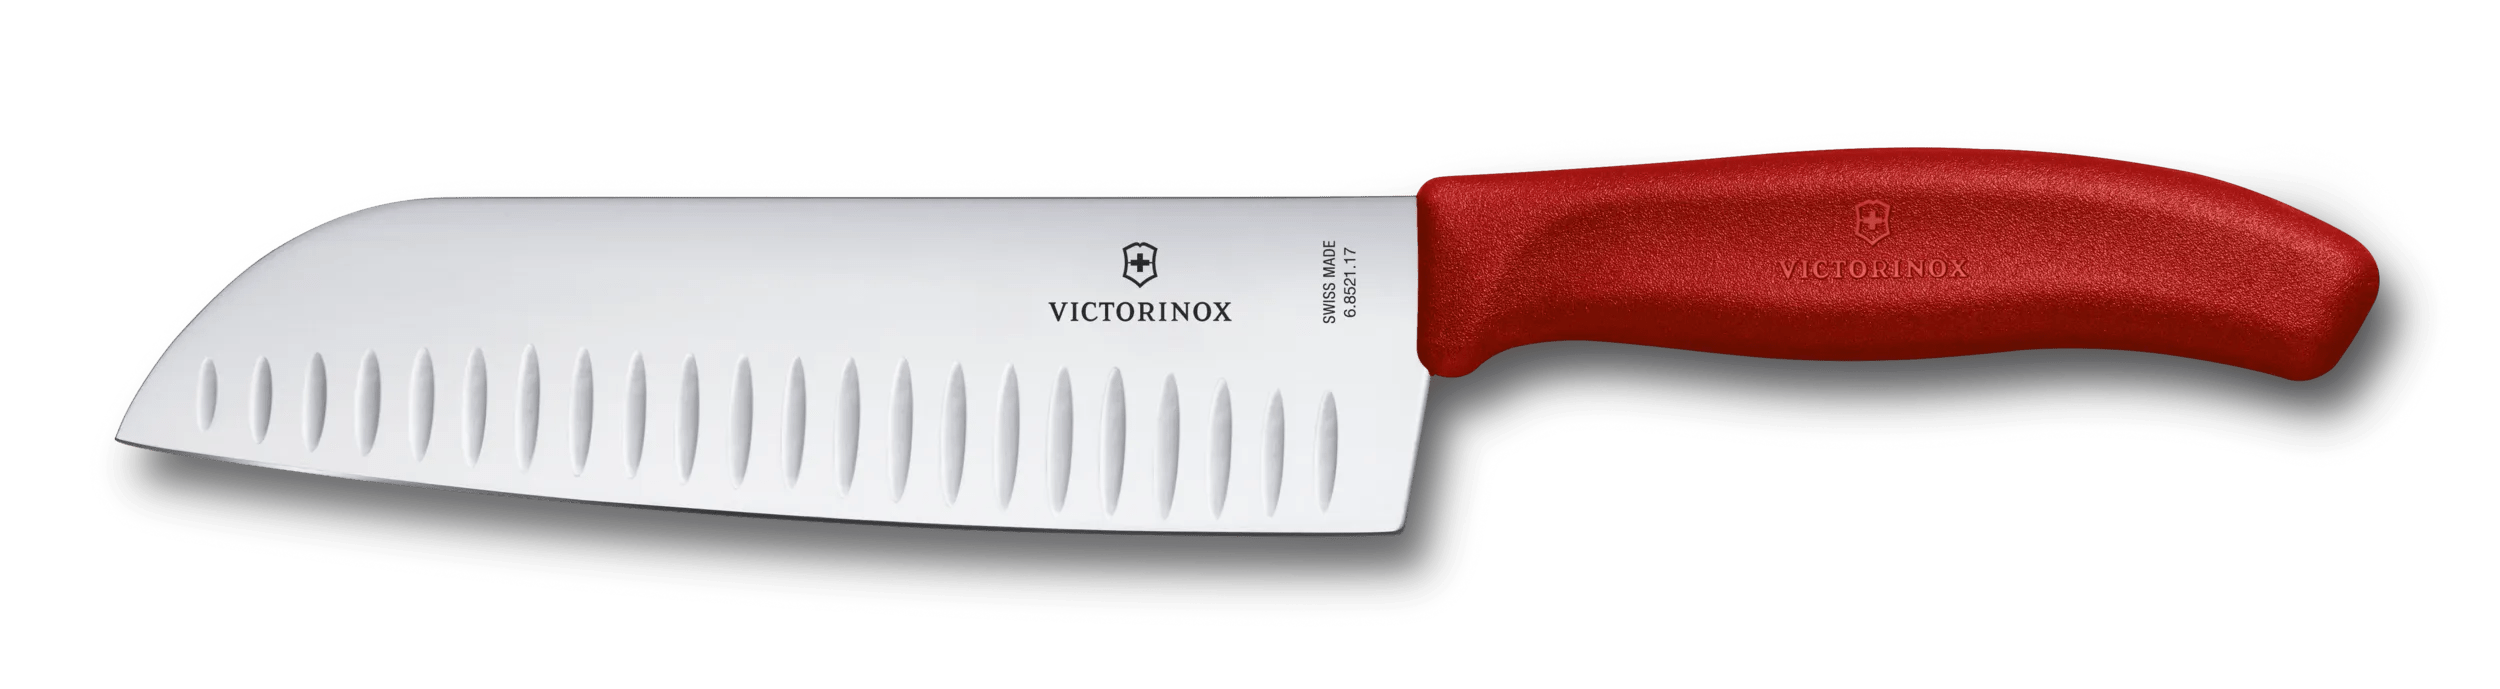 Victorinox スイスクラシック 三徳包丁 ブラック - 6.8503.17G